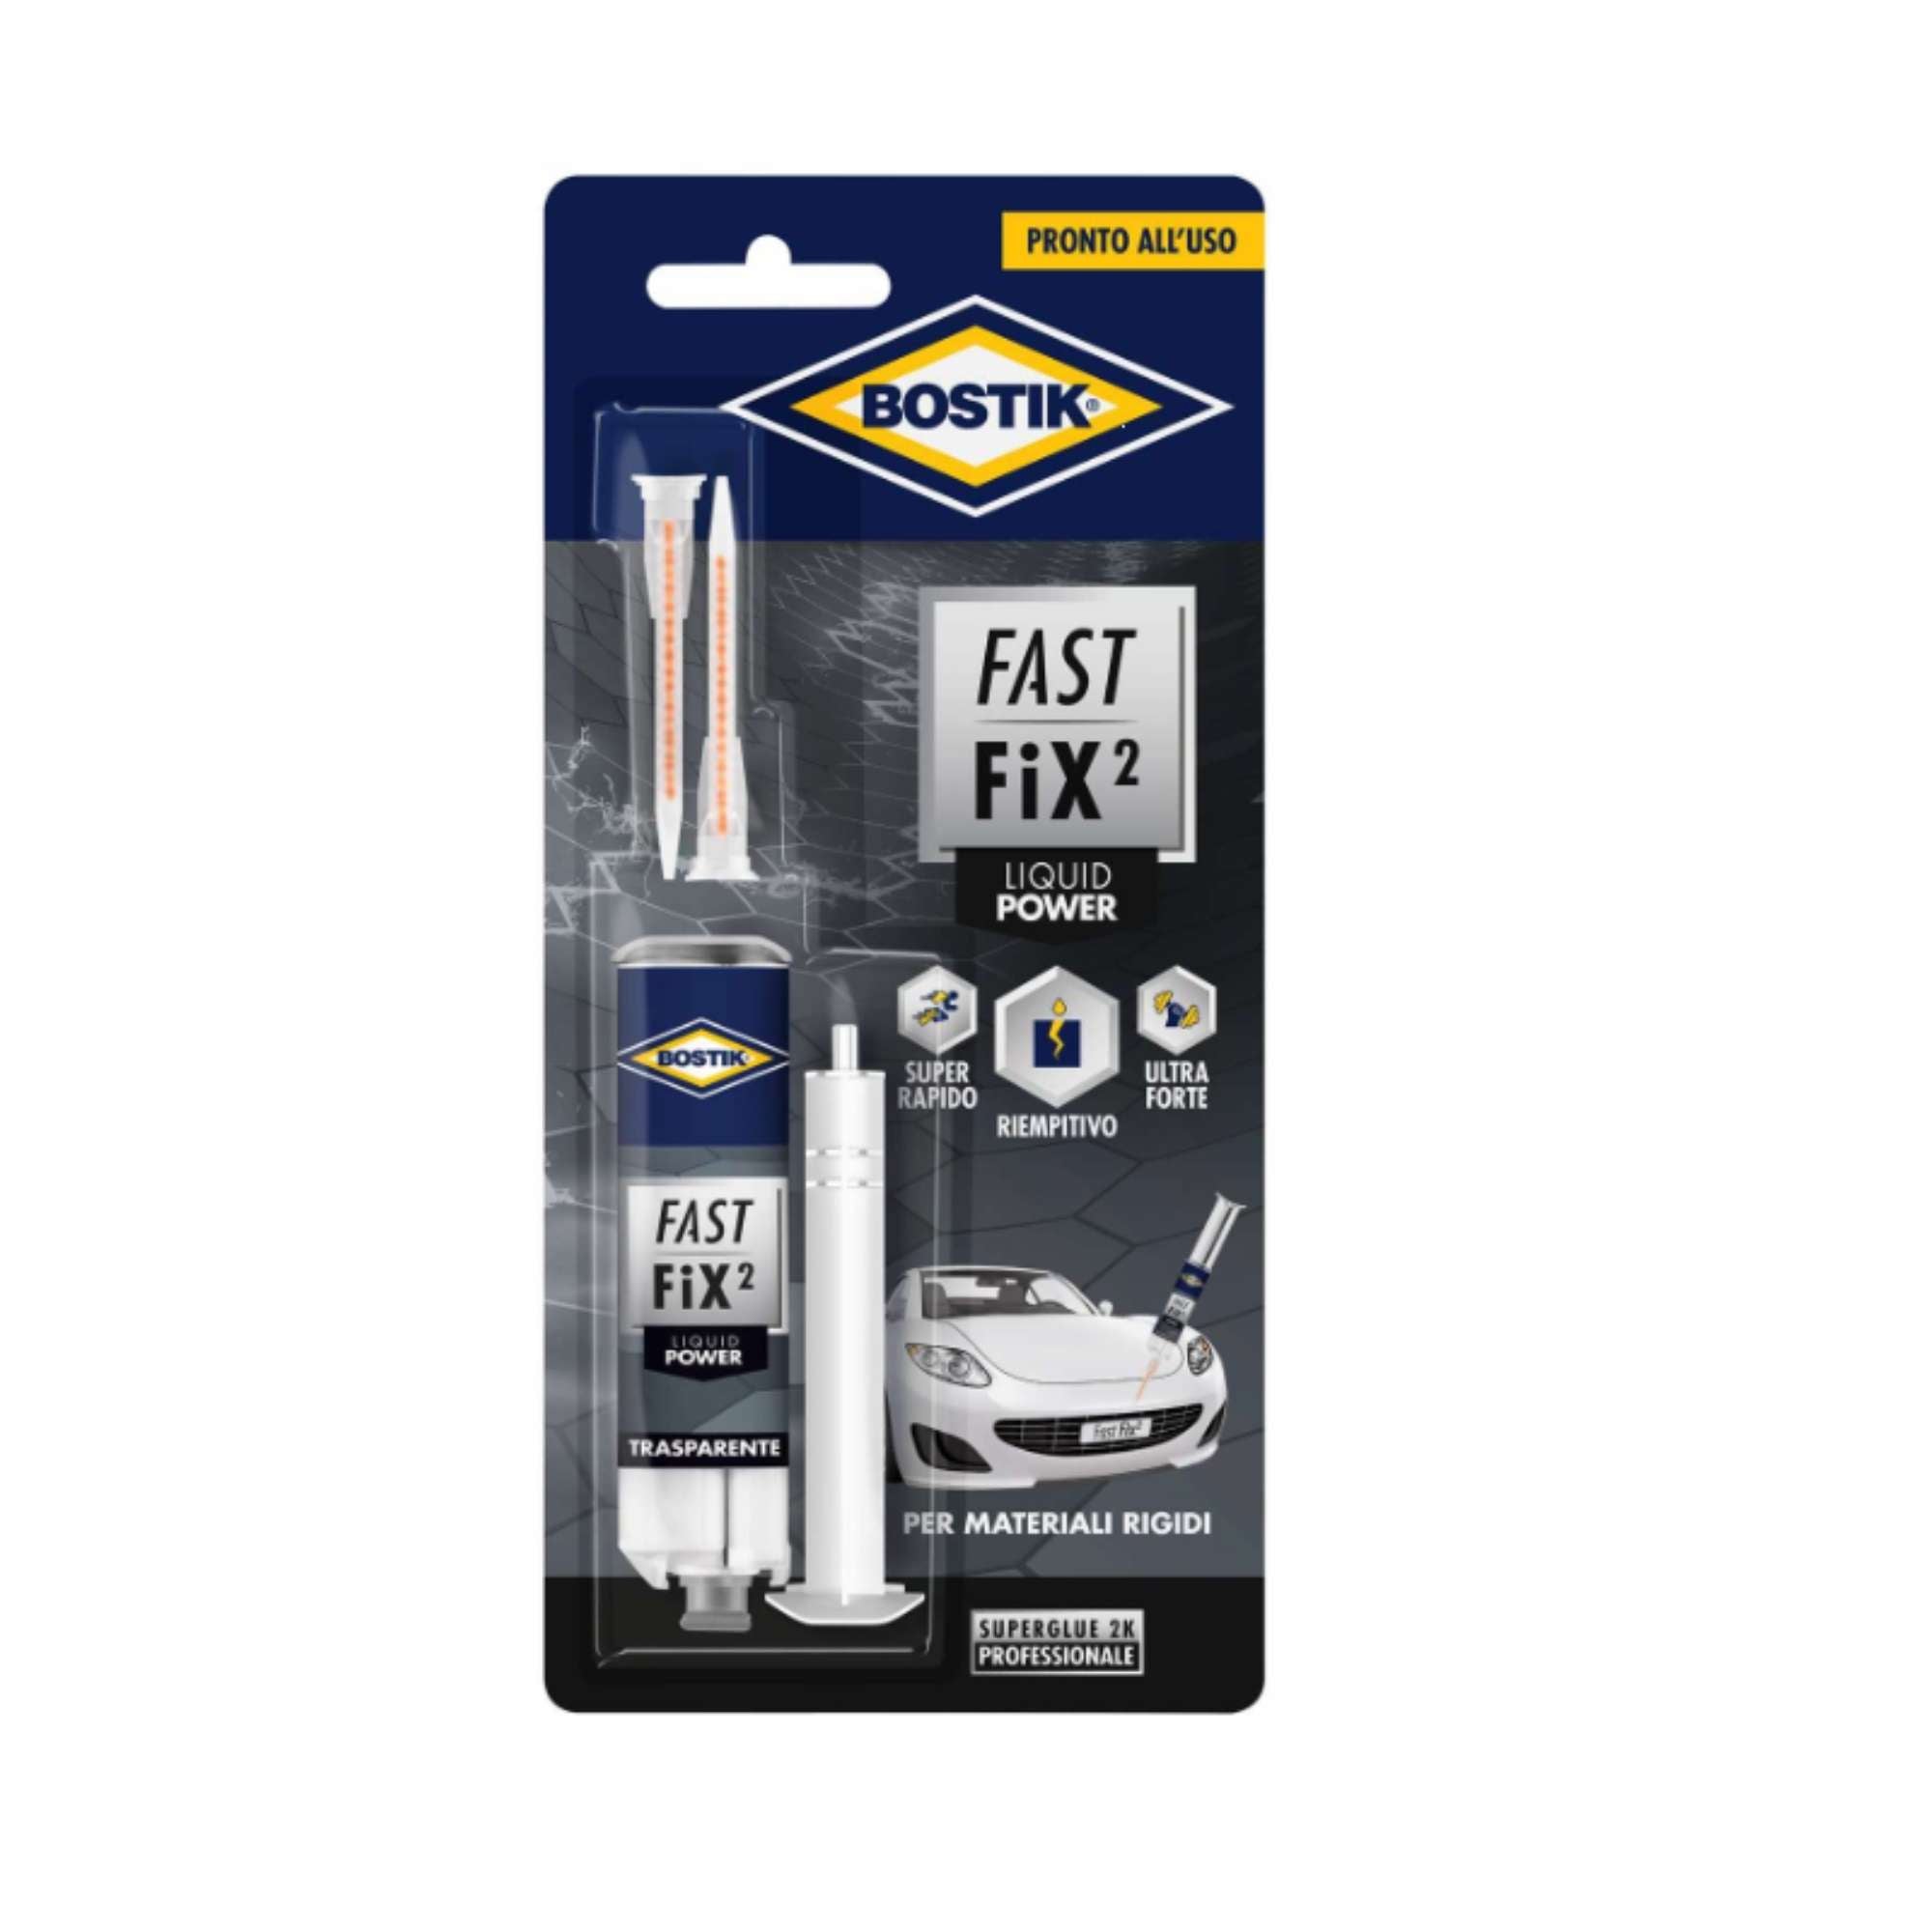 Bostik Fast Fix2 Power - UHU Bostik 7000663